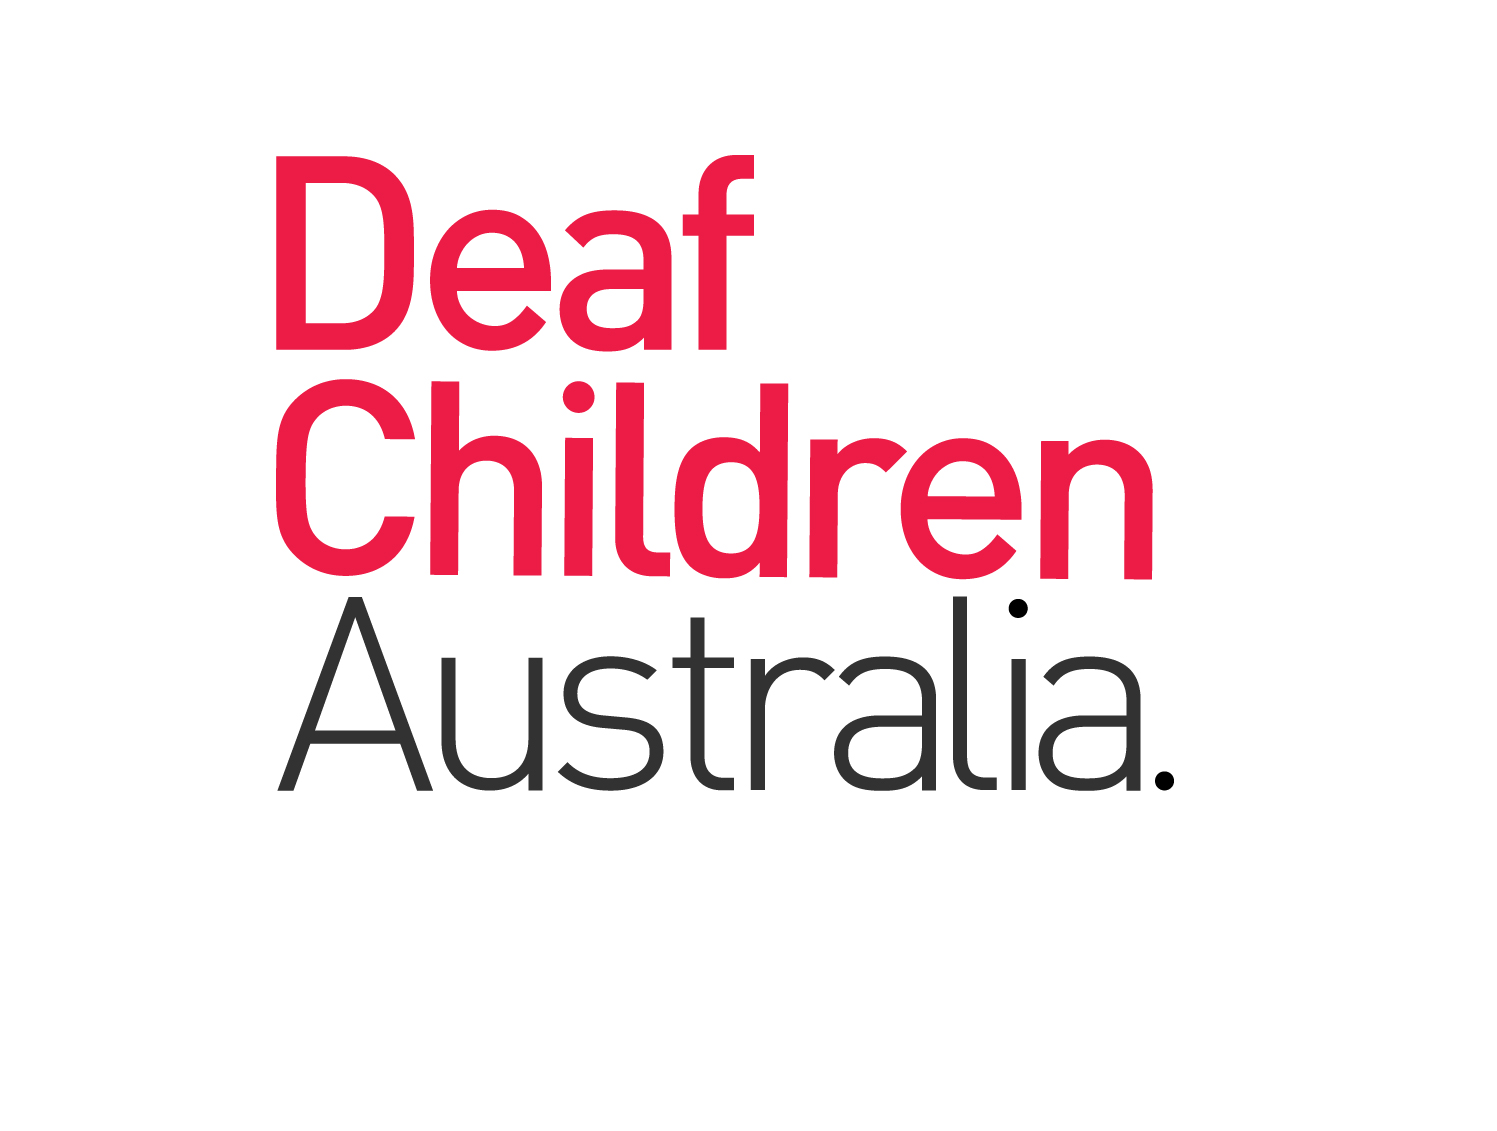 Deaf Children Australia